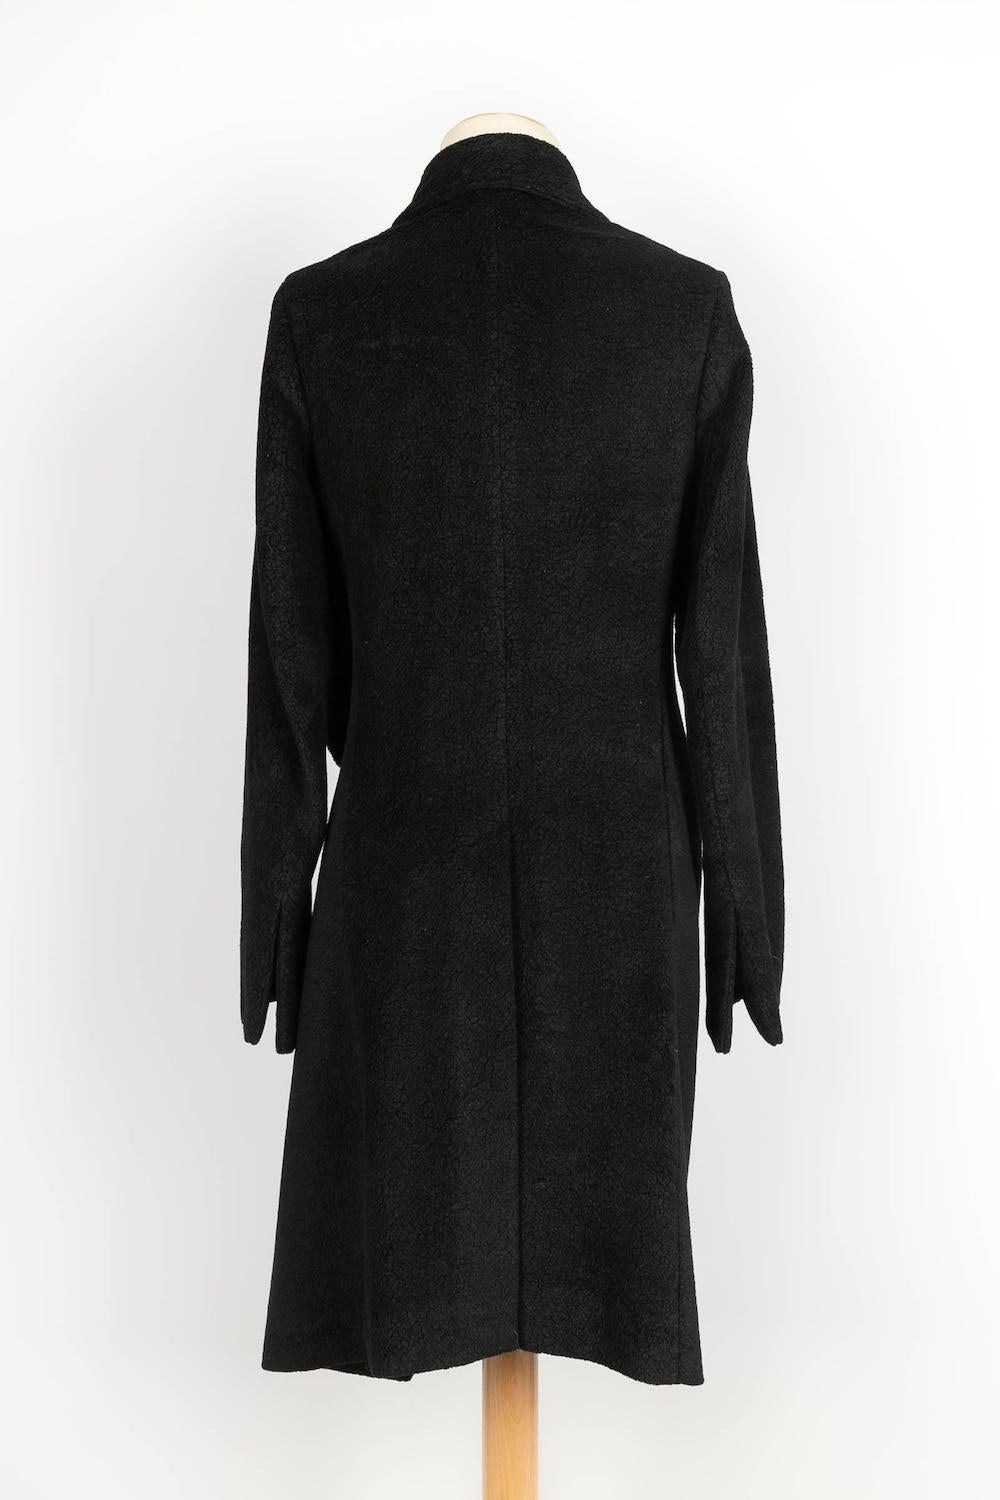 Women's Peachoo + Krejberg Black Coat of Cotton For Sale